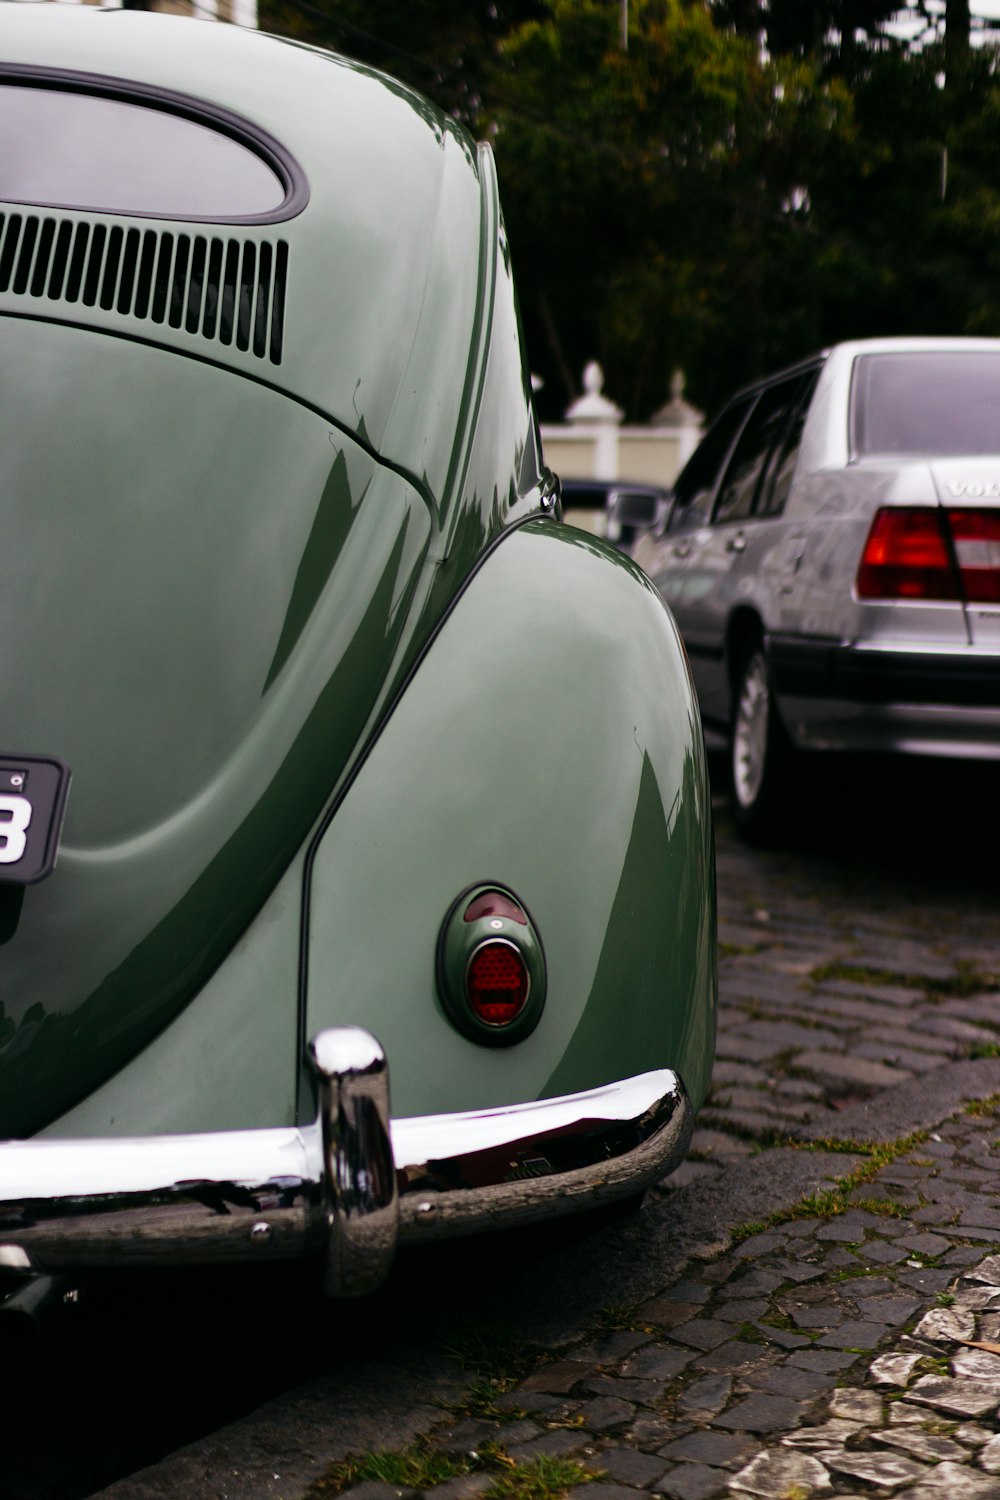 green Volkswagen Beetle parked near gray vehicle